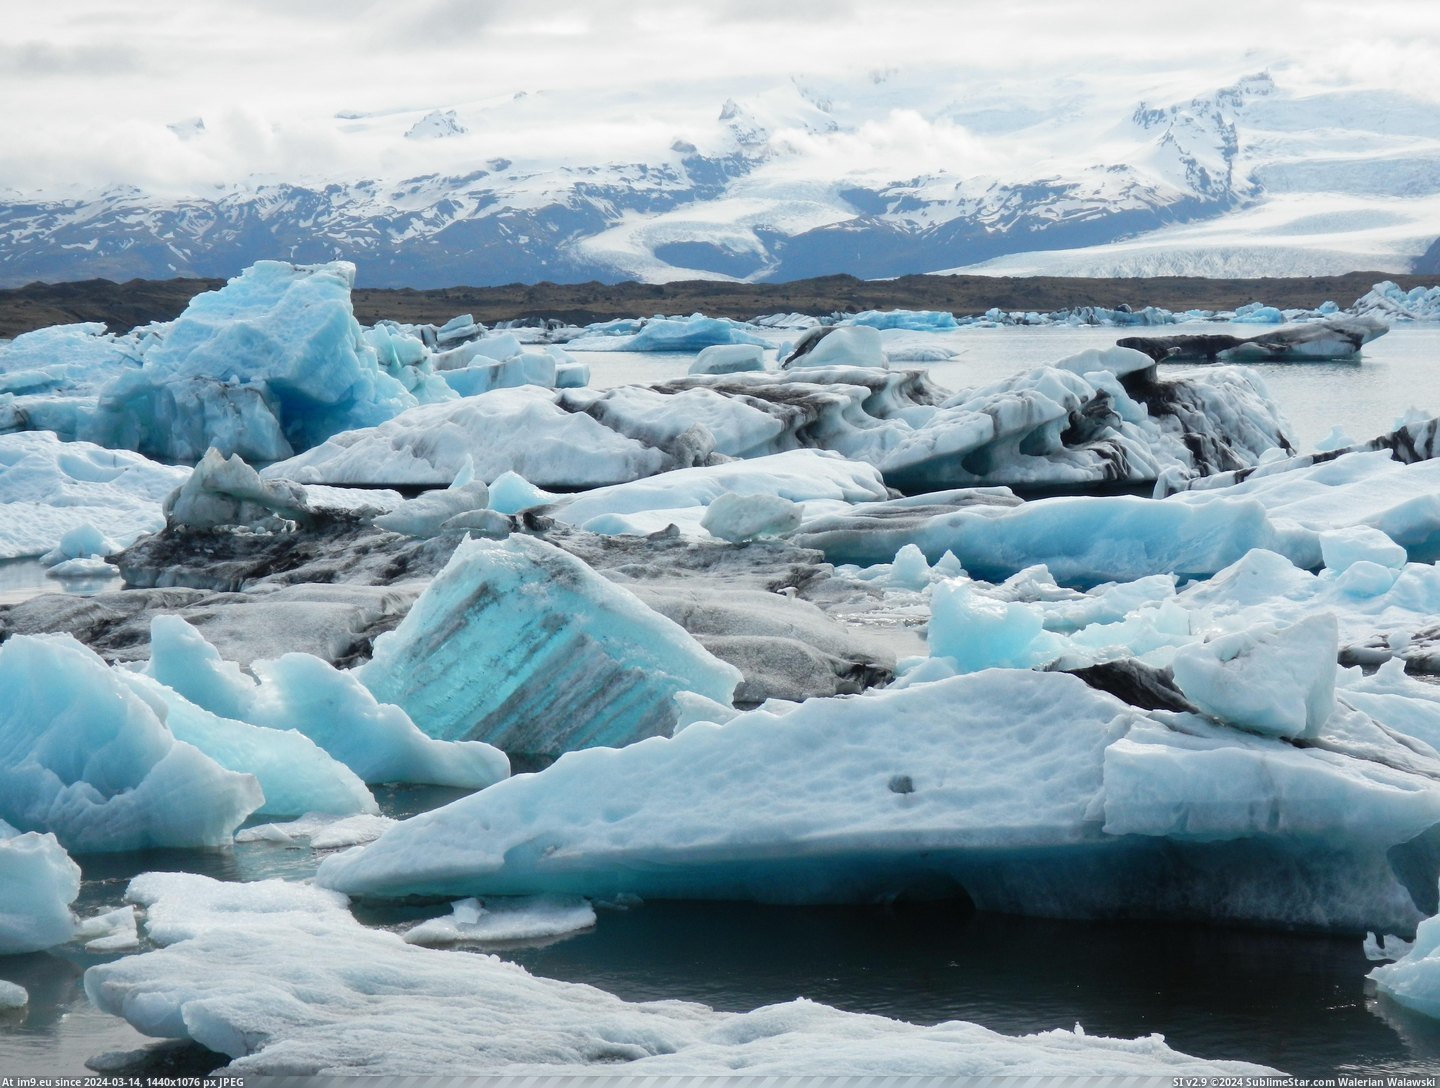 #Picture #4608x3456 #Glacial #Lagoon [Earthporn] Jokulsarlon Glacial Lagoon- picture taken 6-4-2015 [4608x3456] Pic. (Bild von album My r/EARTHPORN favs))